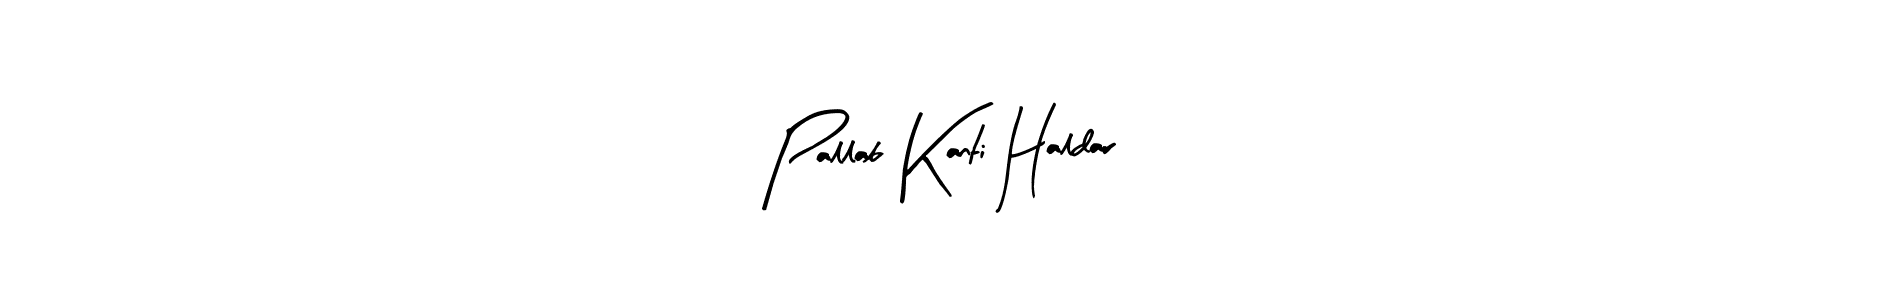 How to Draw Pallab Kanti Haldar signature style? Arty Signature is a latest design signature styles for name Pallab Kanti Haldar. Pallab Kanti Haldar signature style 8 images and pictures png